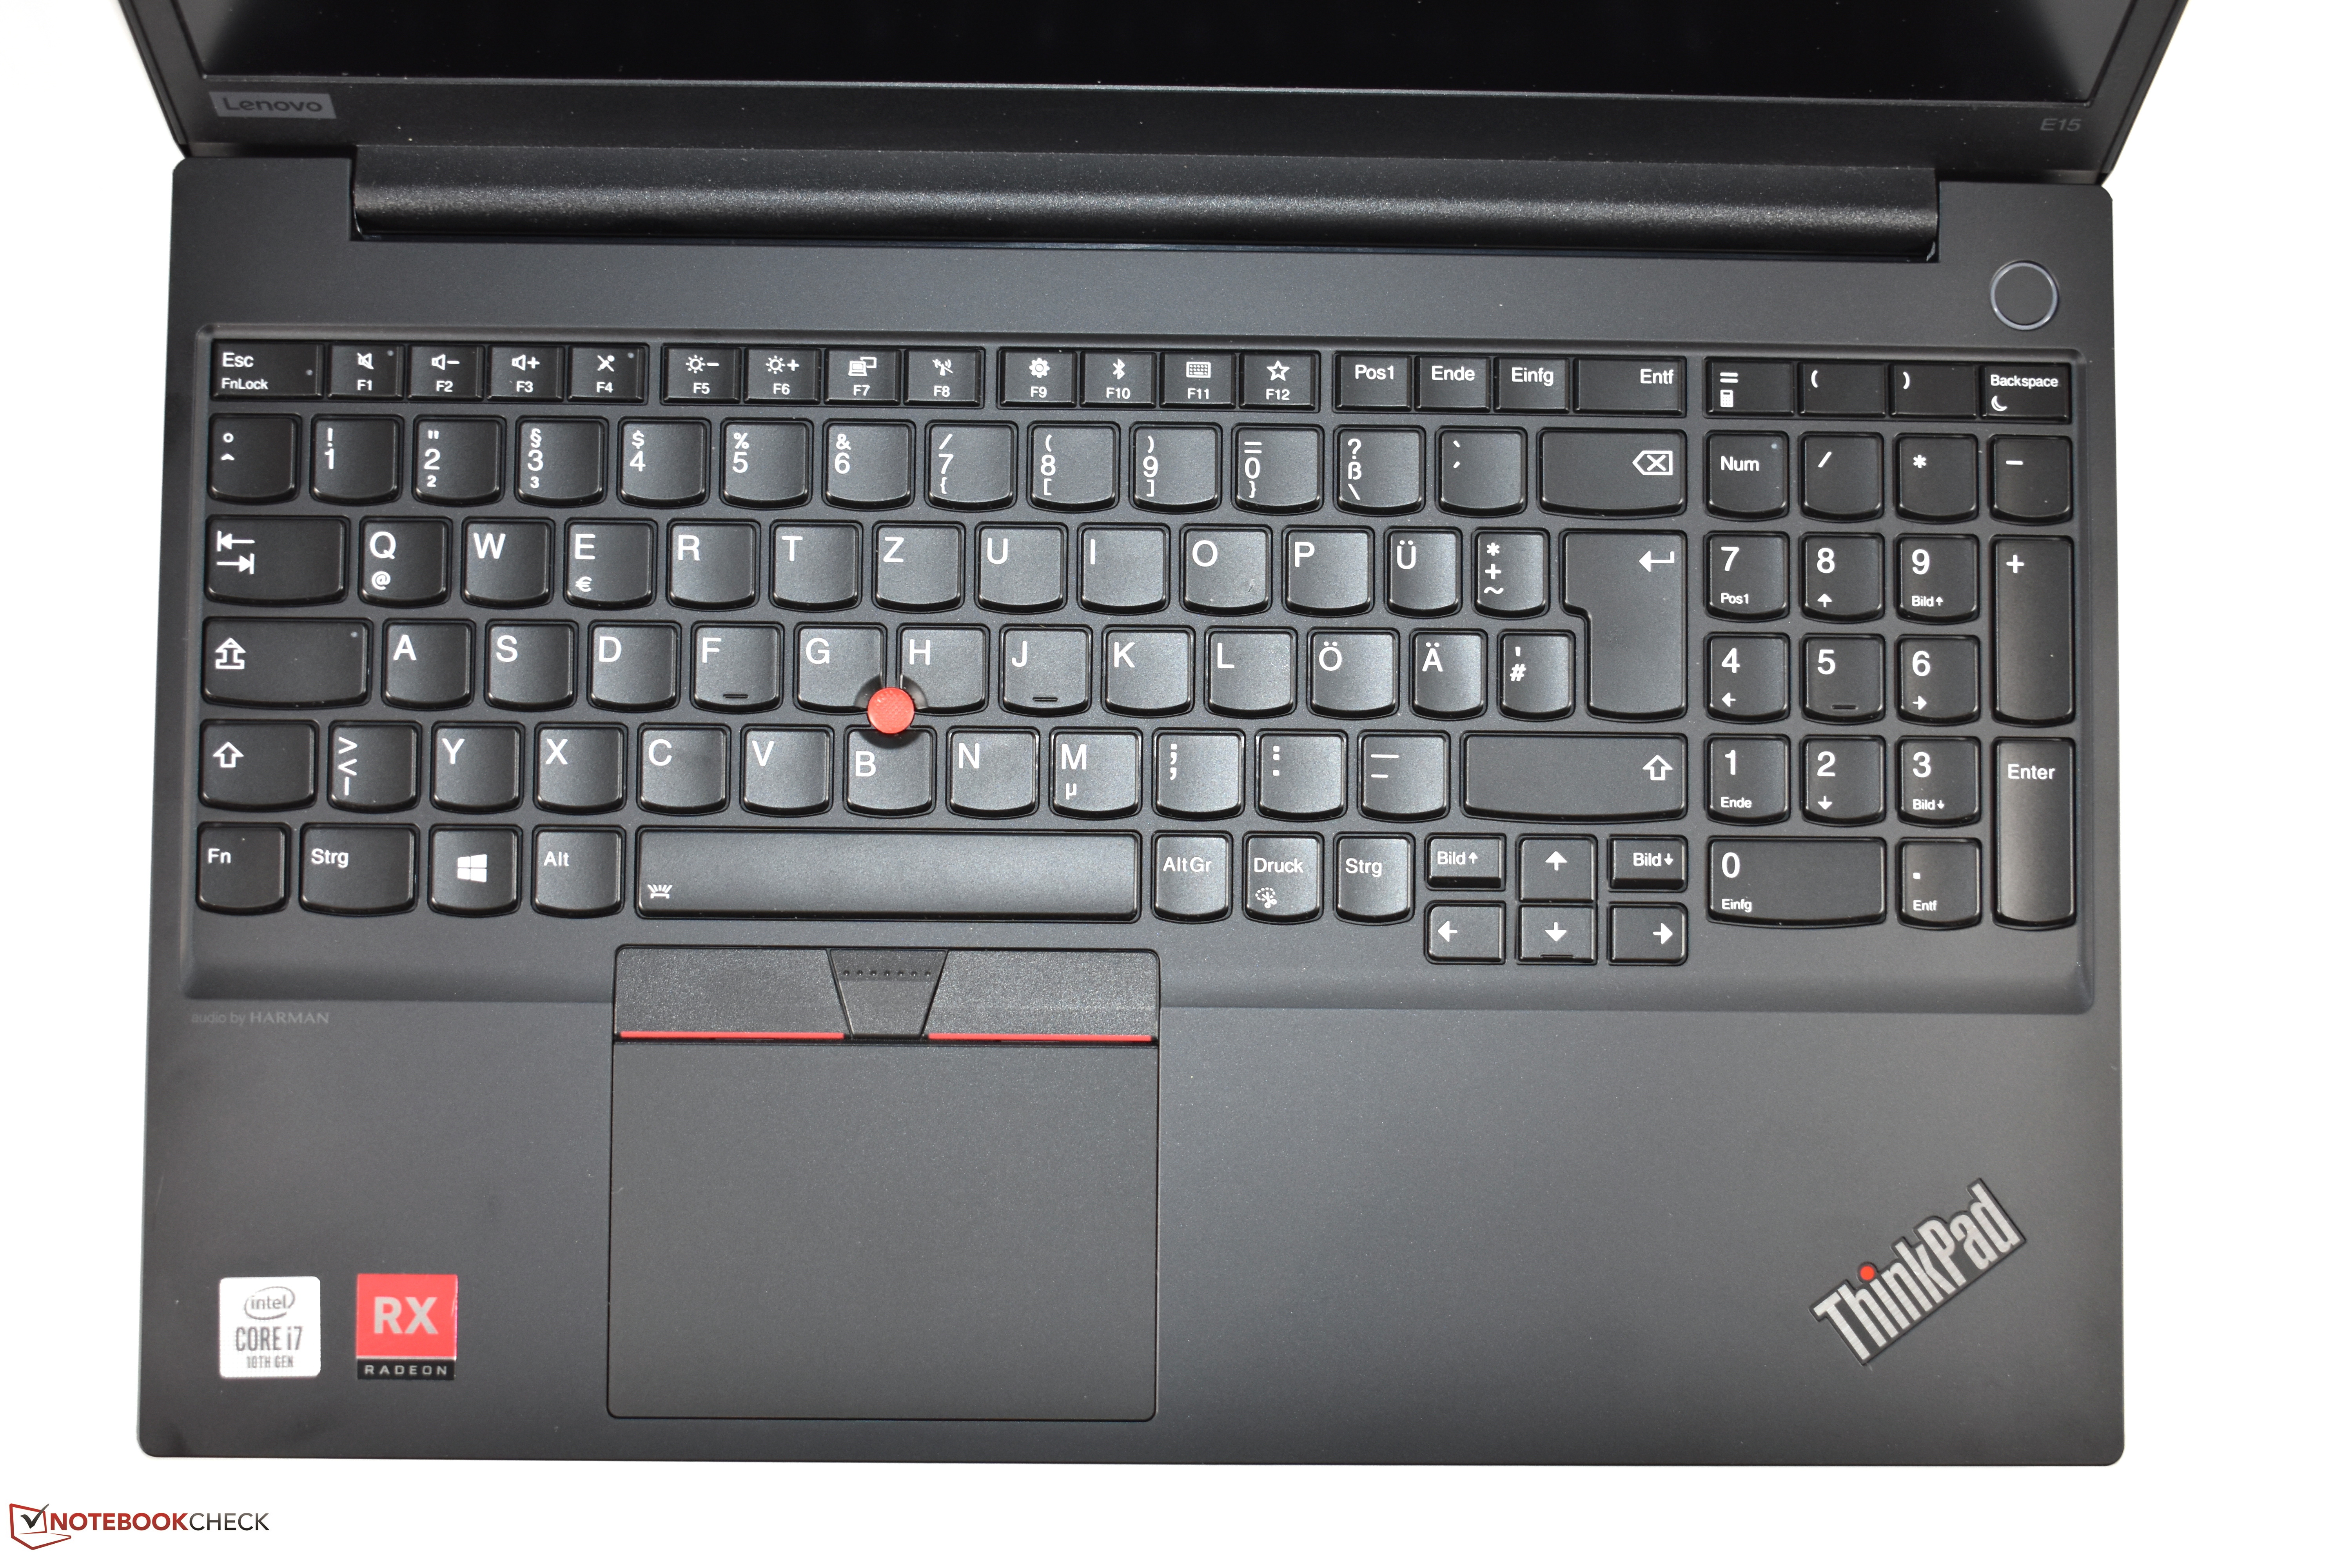 Ноутбук Lenovo Thinkpad E15 Купить В Минске